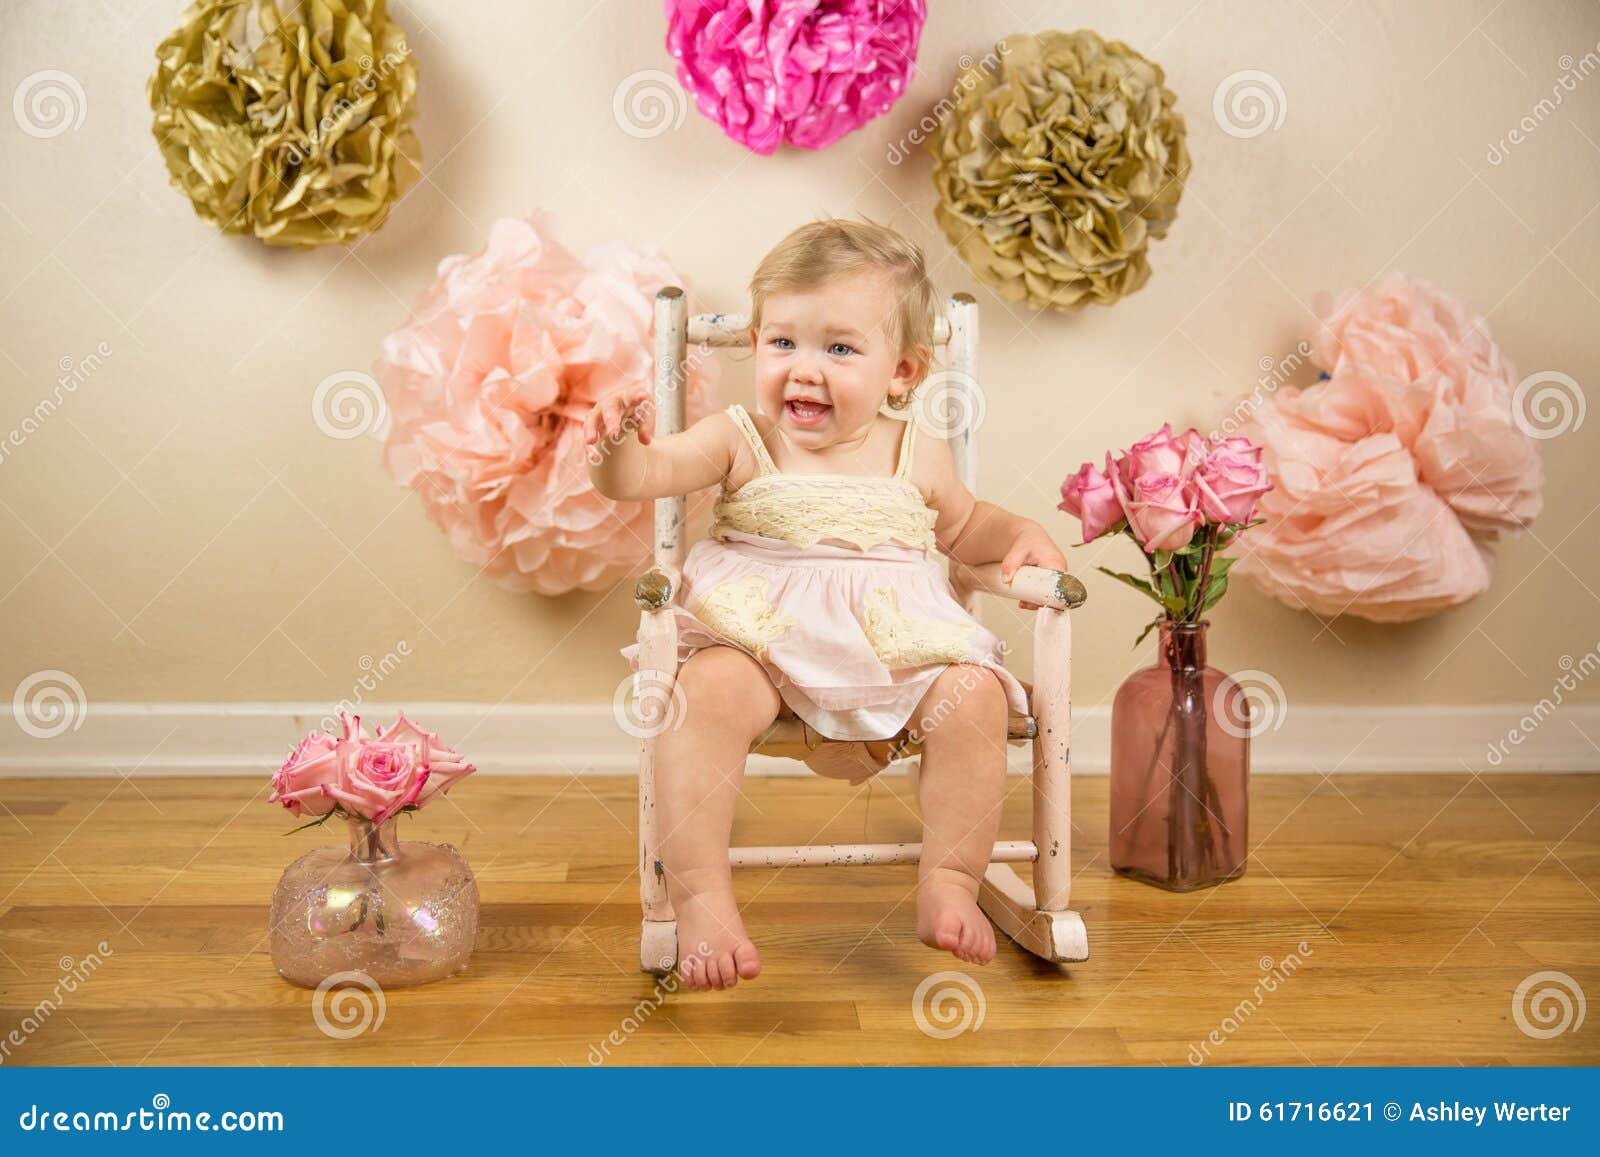 First Birthday Photoshoot Stock Image Image Of Cake 61716621